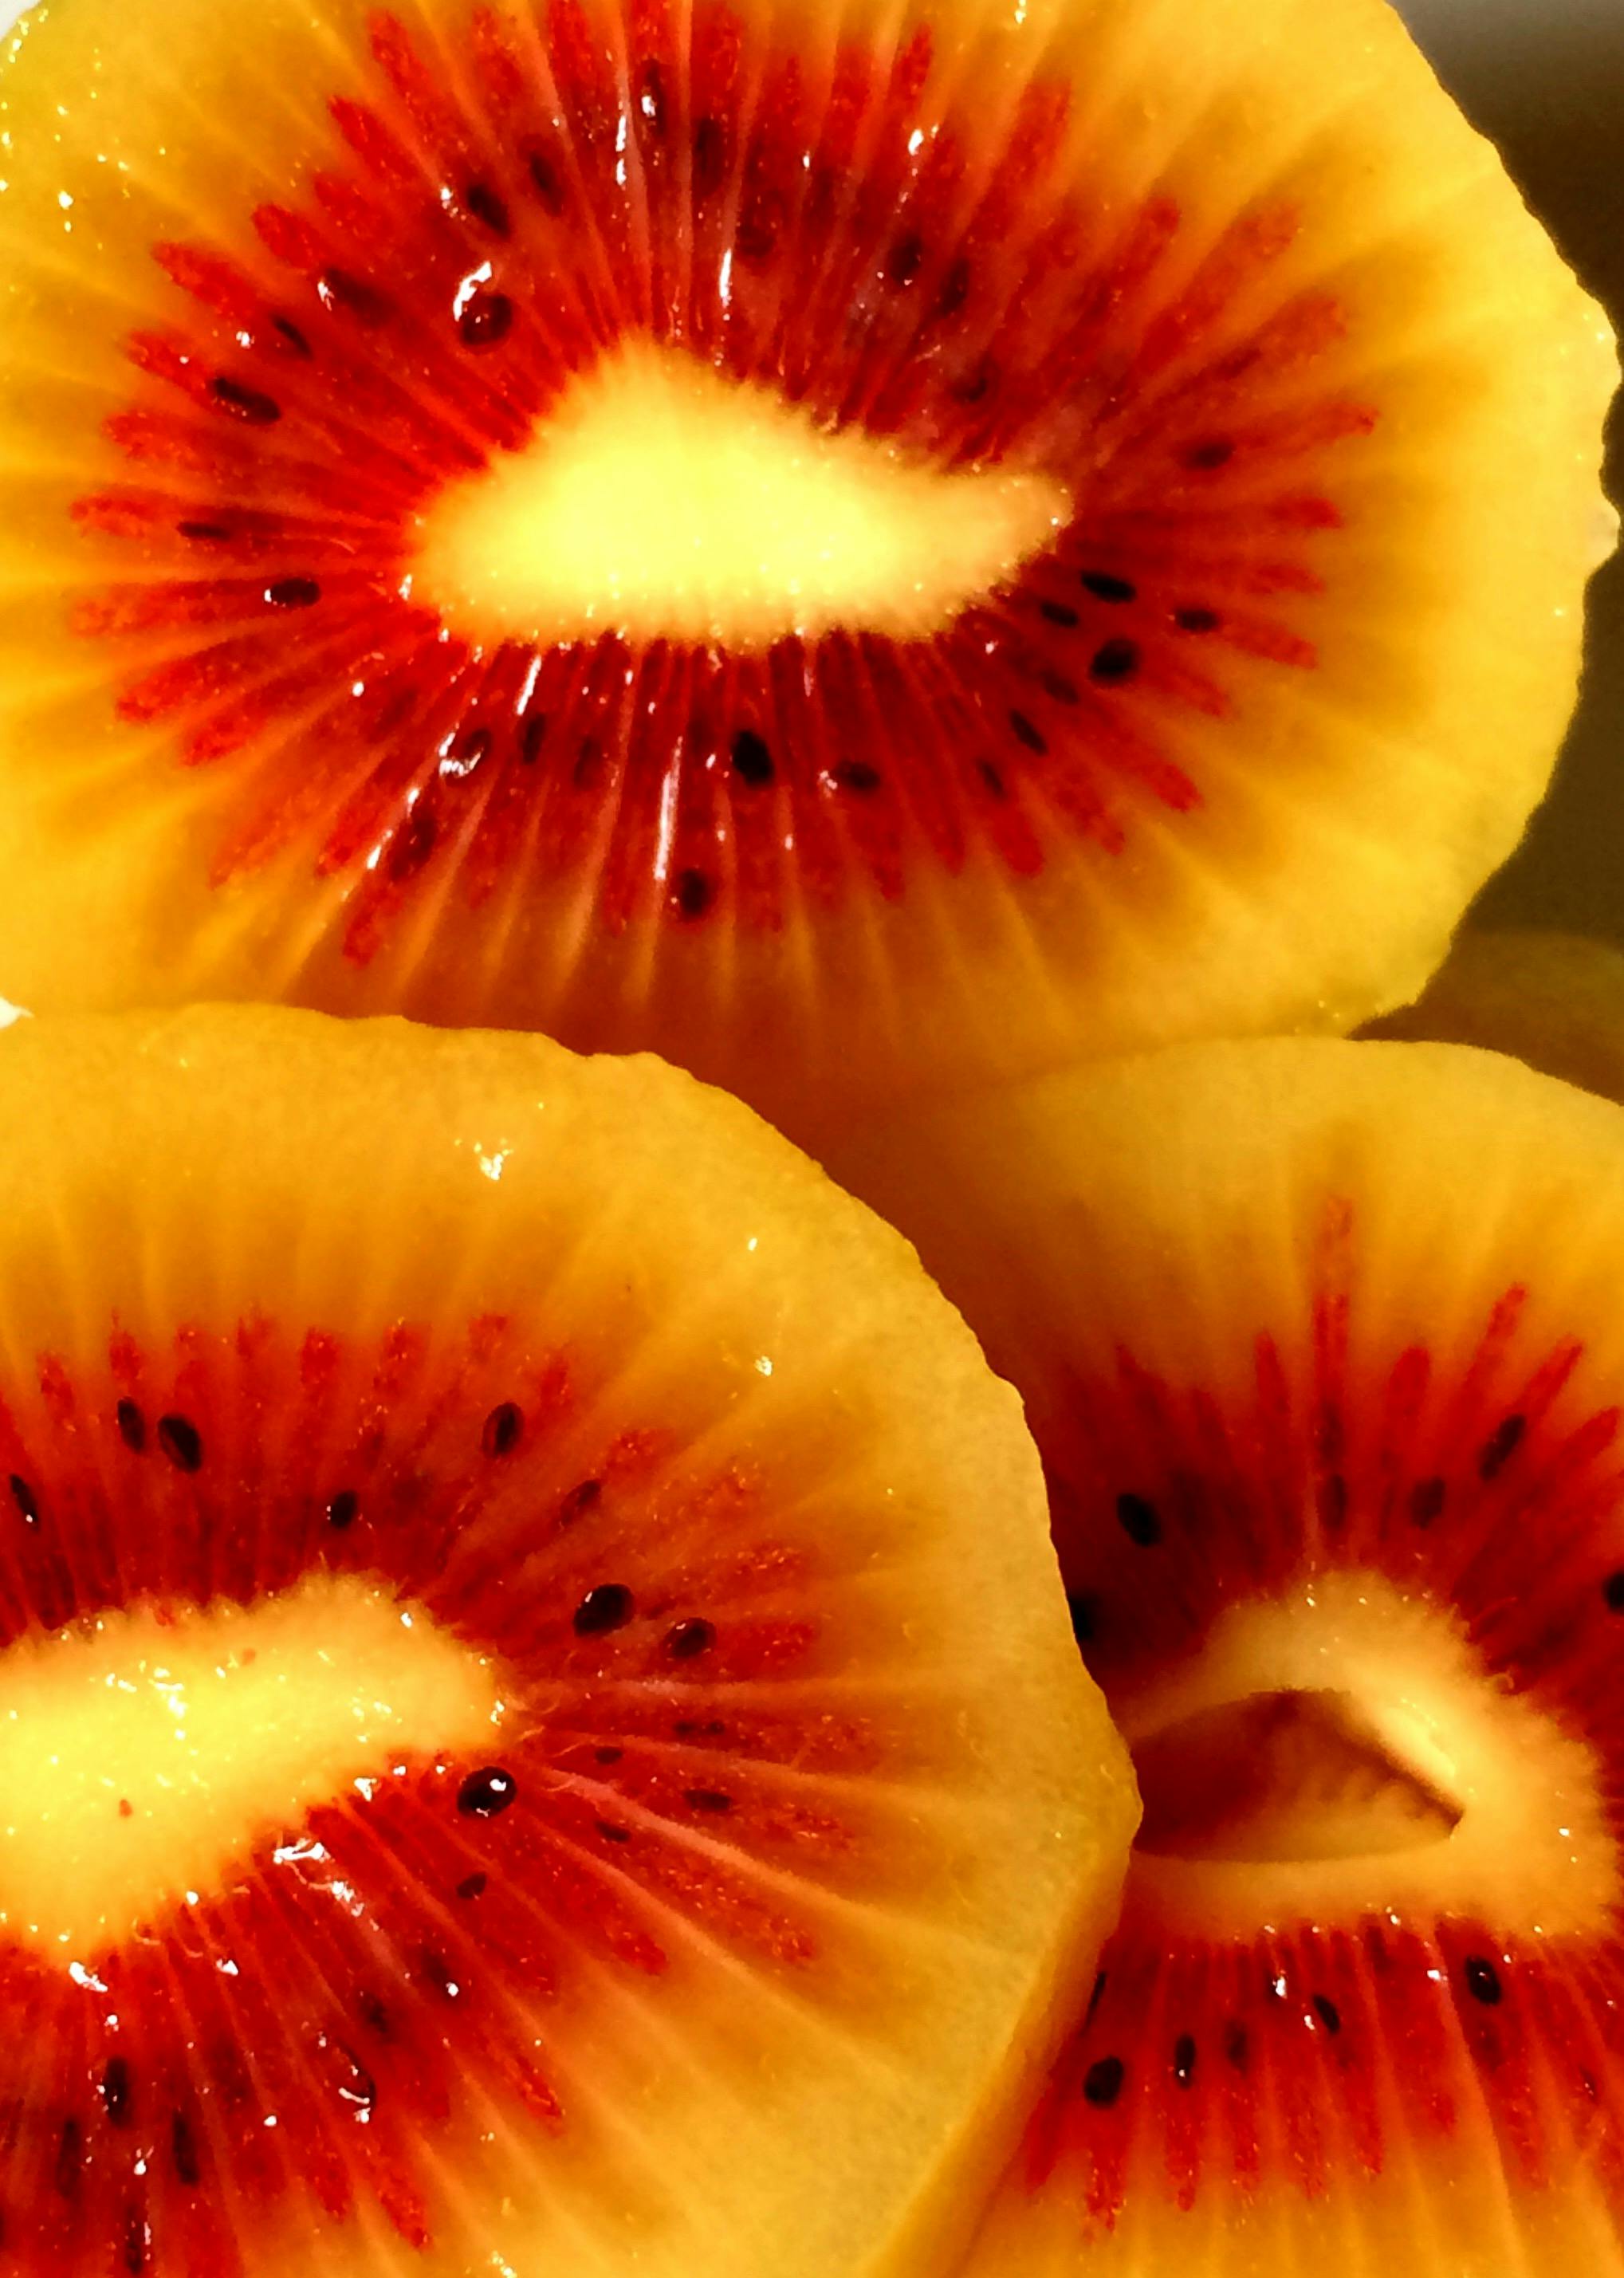 Free stock photo of kiwi fruit, kiwis, mixed fruits